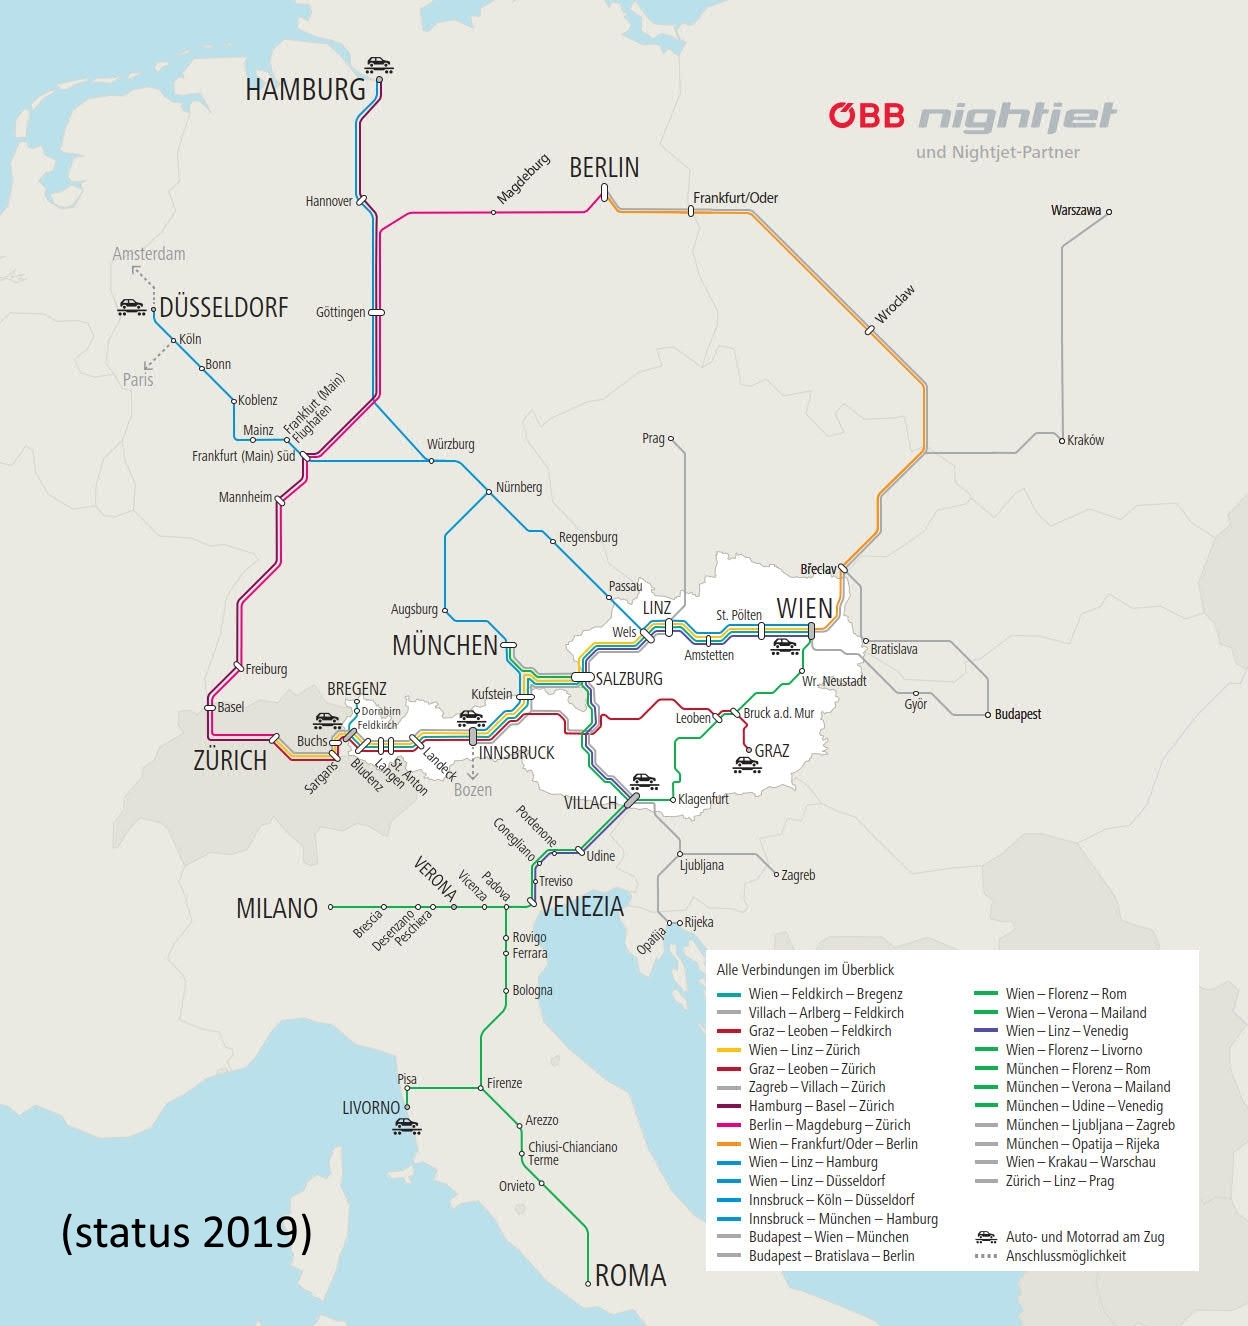 Nightjet night train network 2019